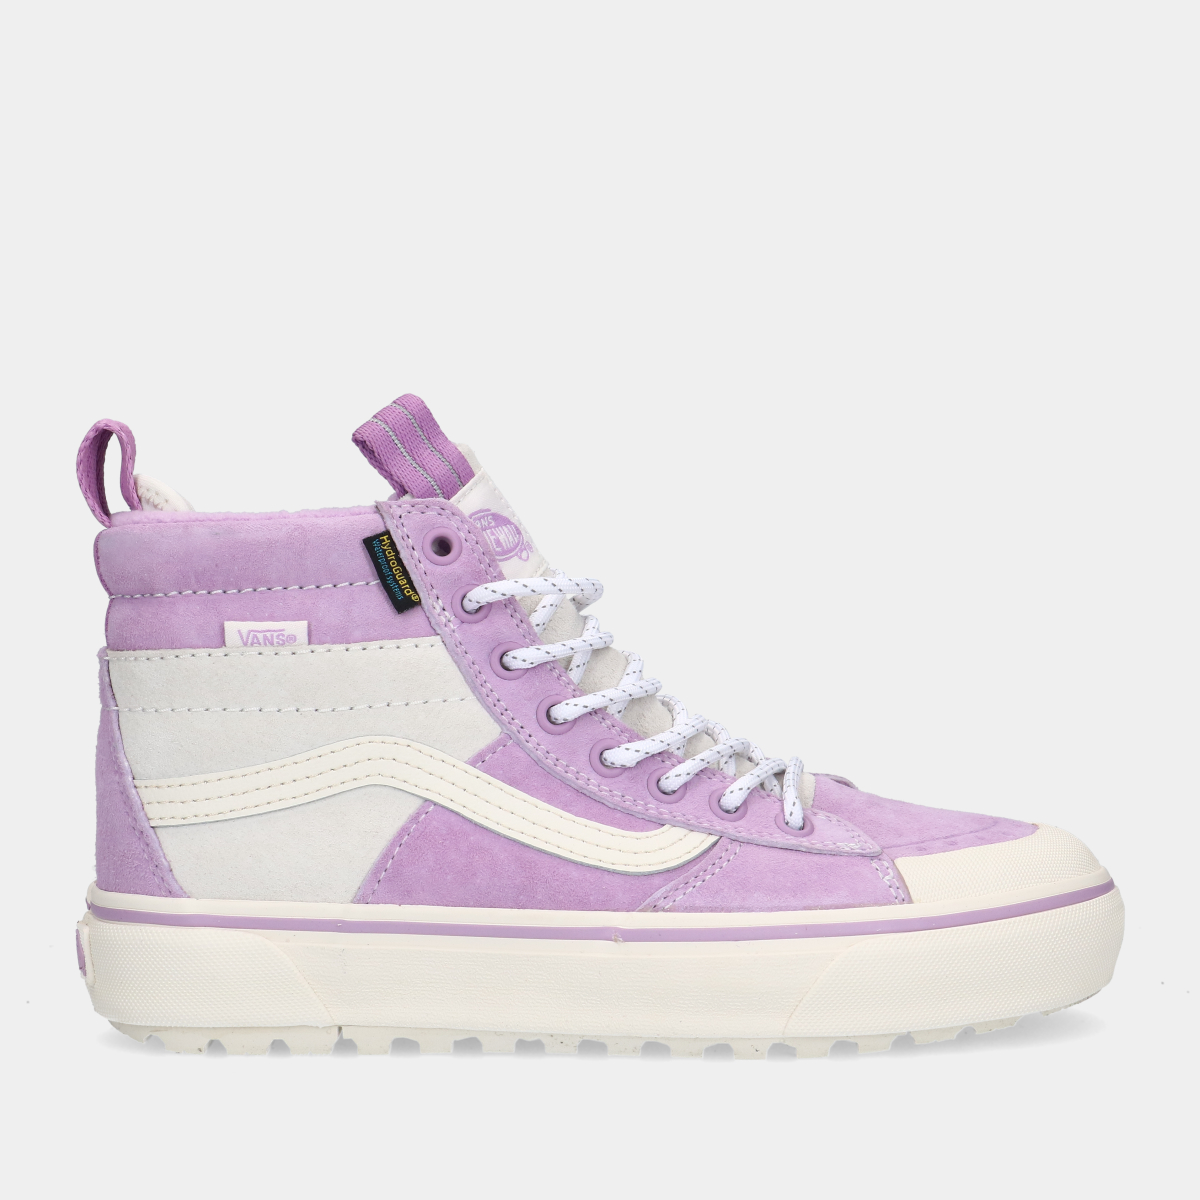 Vans Sk8-Hi Mte-2 Violet Ice/Marshmallow sneakers